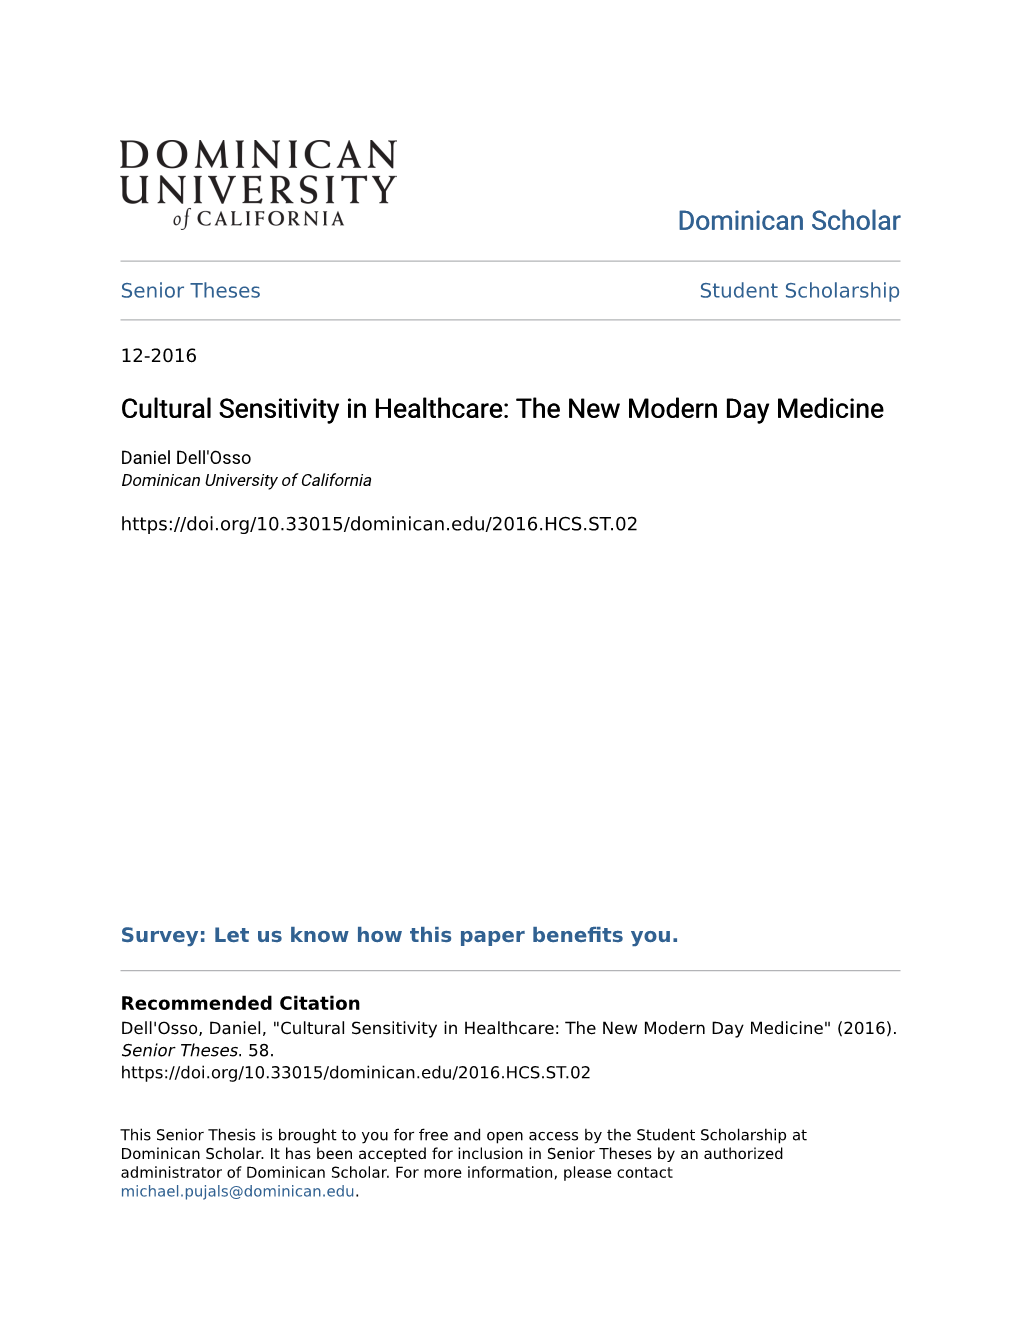 Cultural Sensitivity in Healthcare: the New Modern Day Medicine